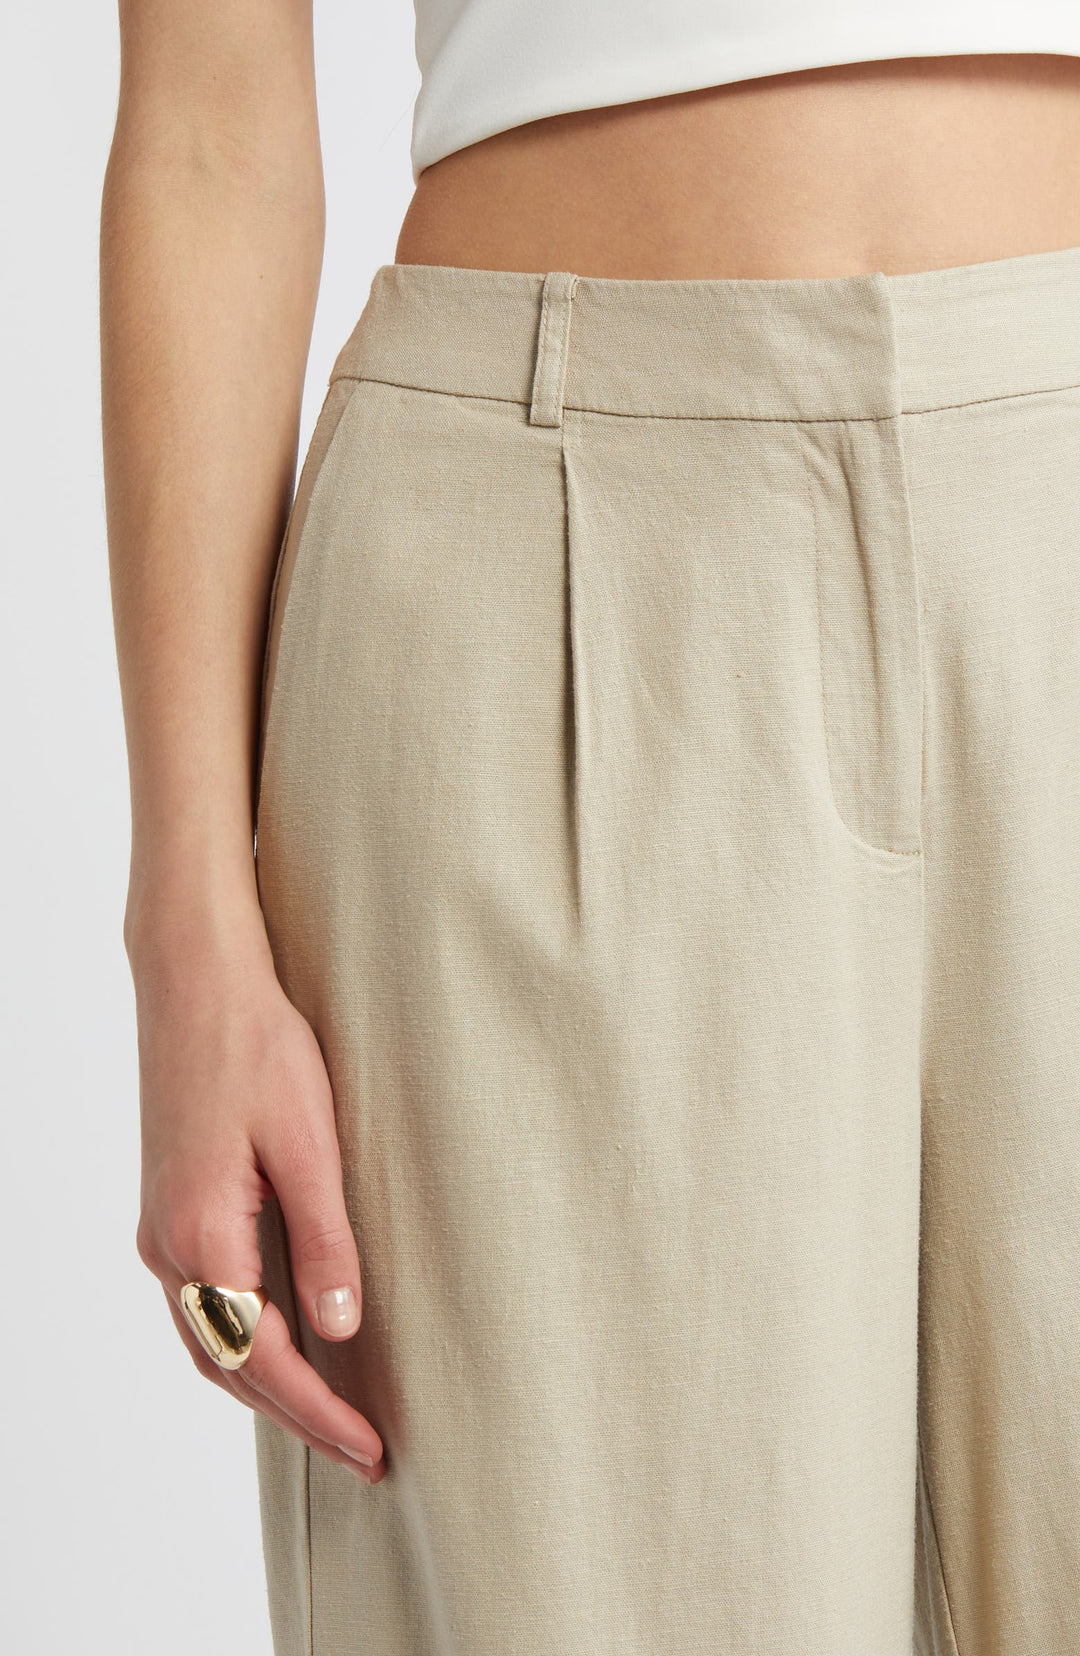 solovedress Beige Linen Casual Women's Pants